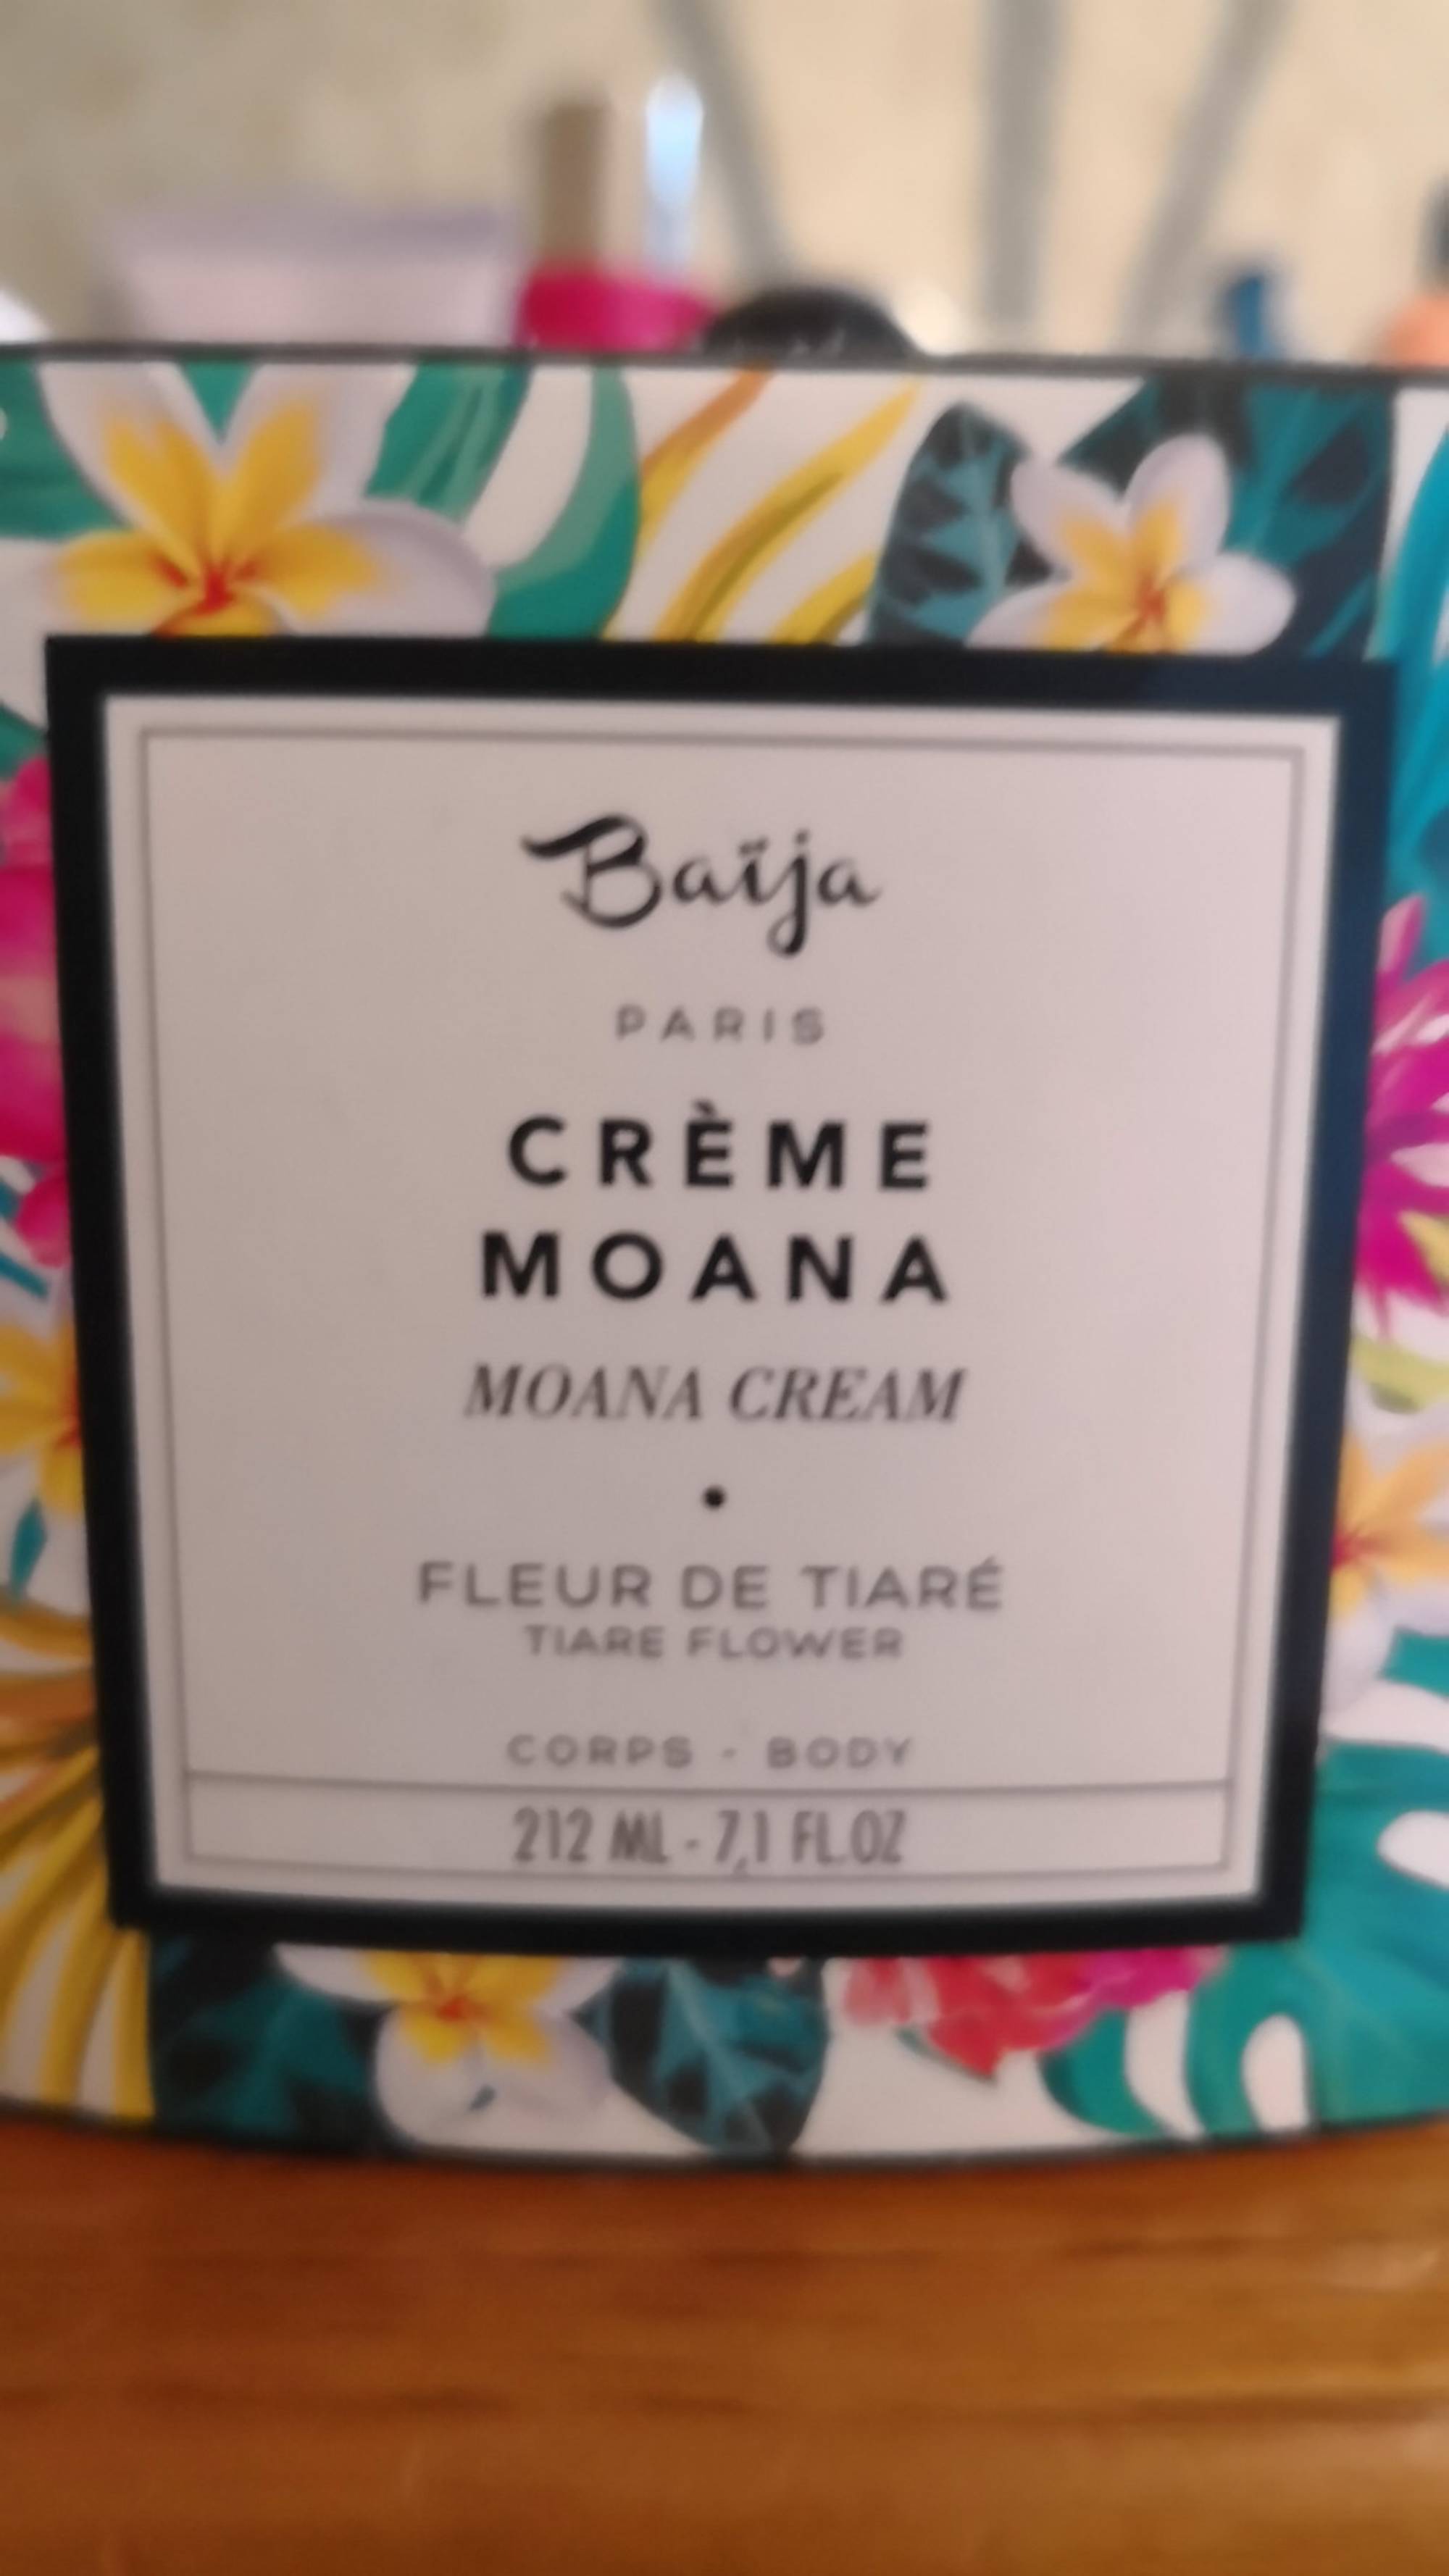 BAIJA - Crème moana - Fleur de tiaré